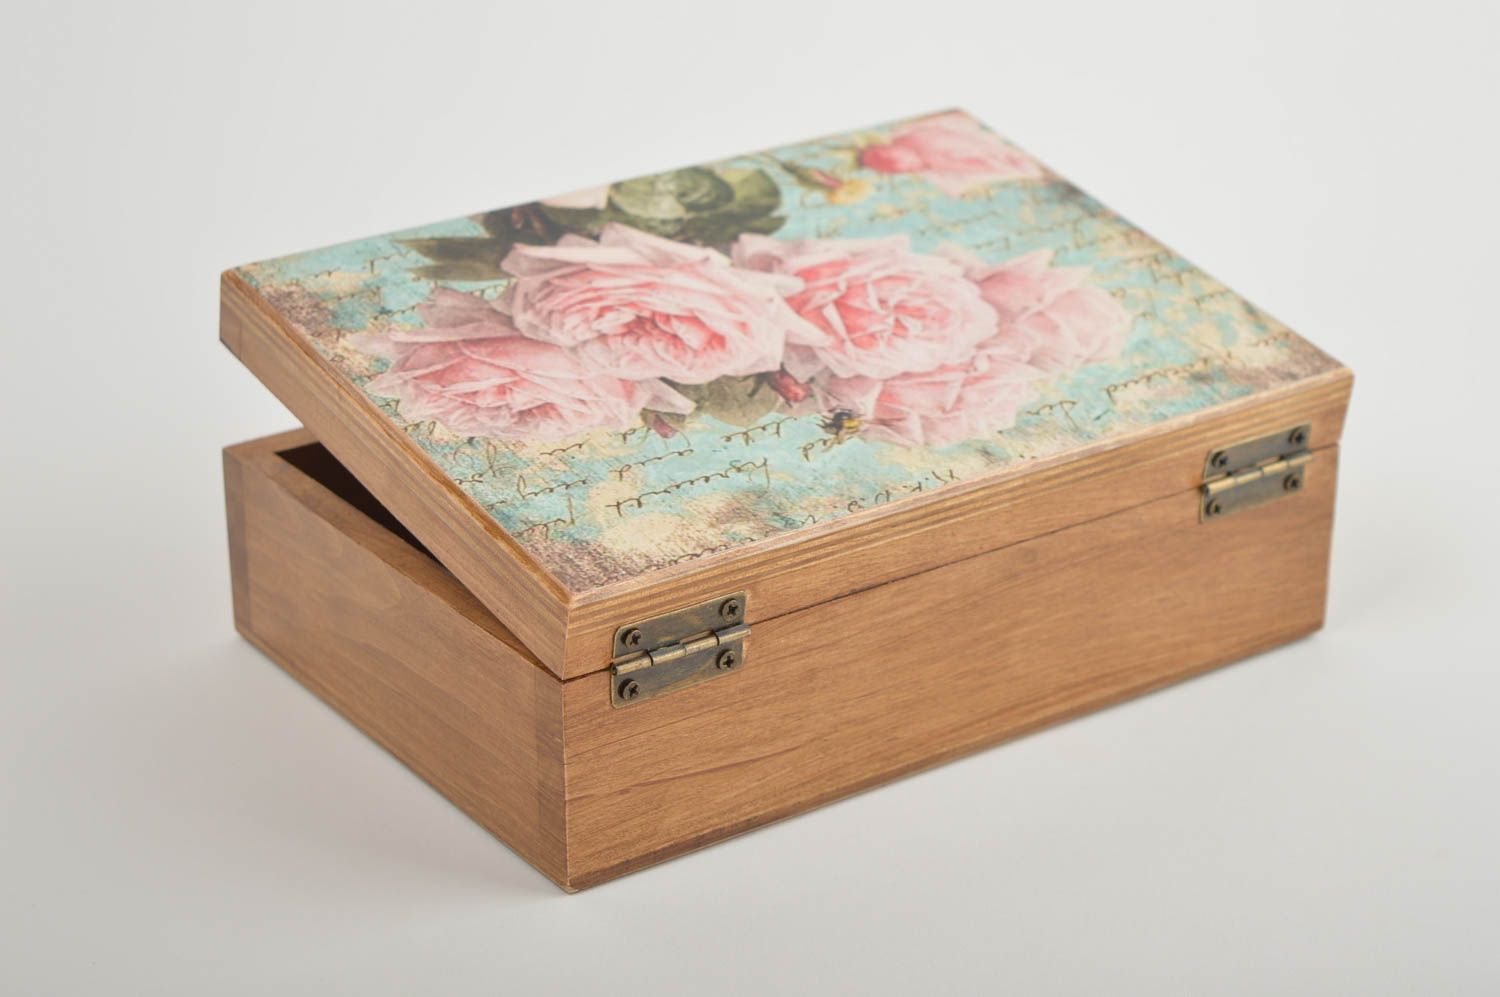 Home Decorative Mother Of pearl Box / Storage Box/ Gifts Box/ Wooden Box/  Antiqu | eBay